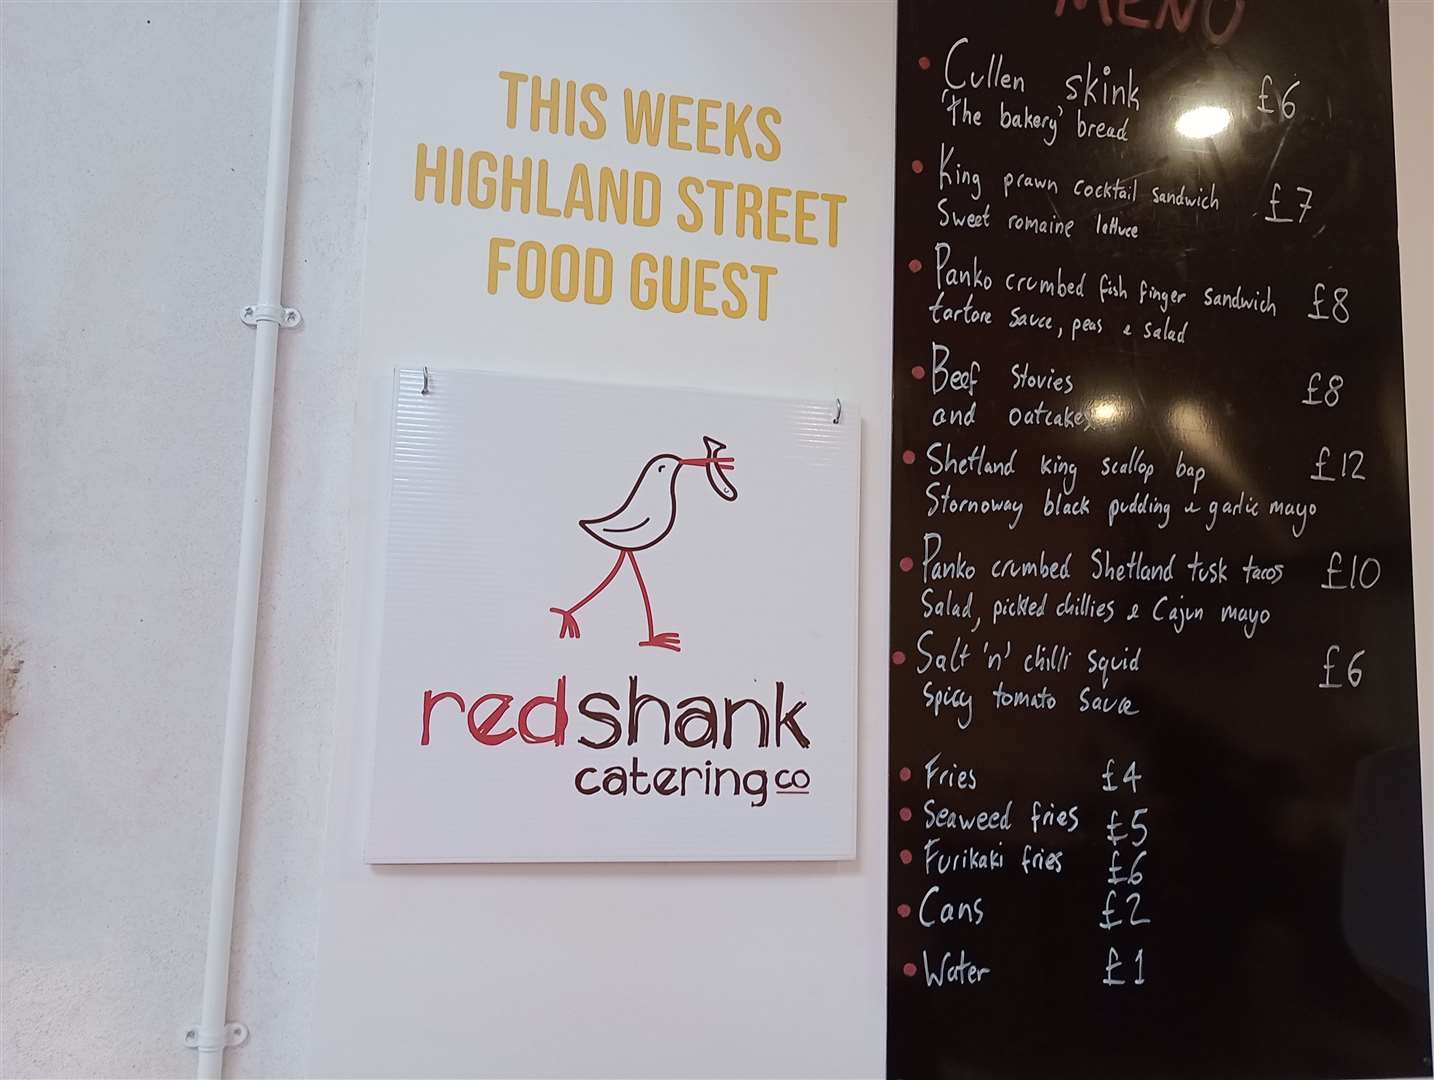 Redshank's menu at the Food Hall.